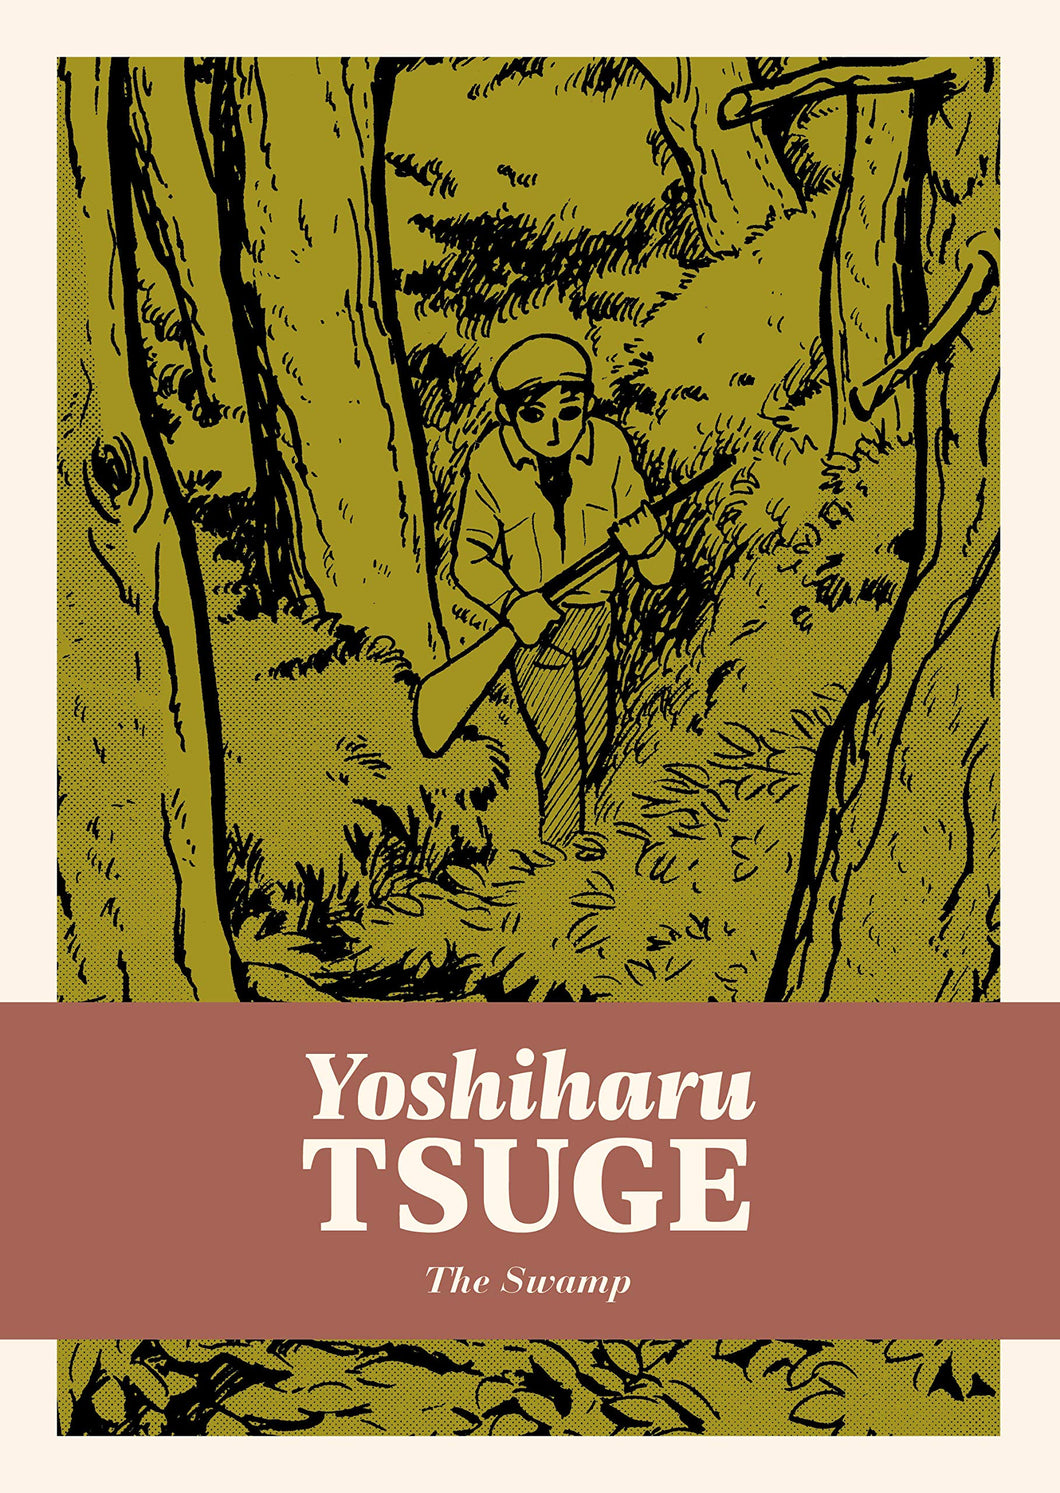 The Swamp by Yoshiharu Tsuge